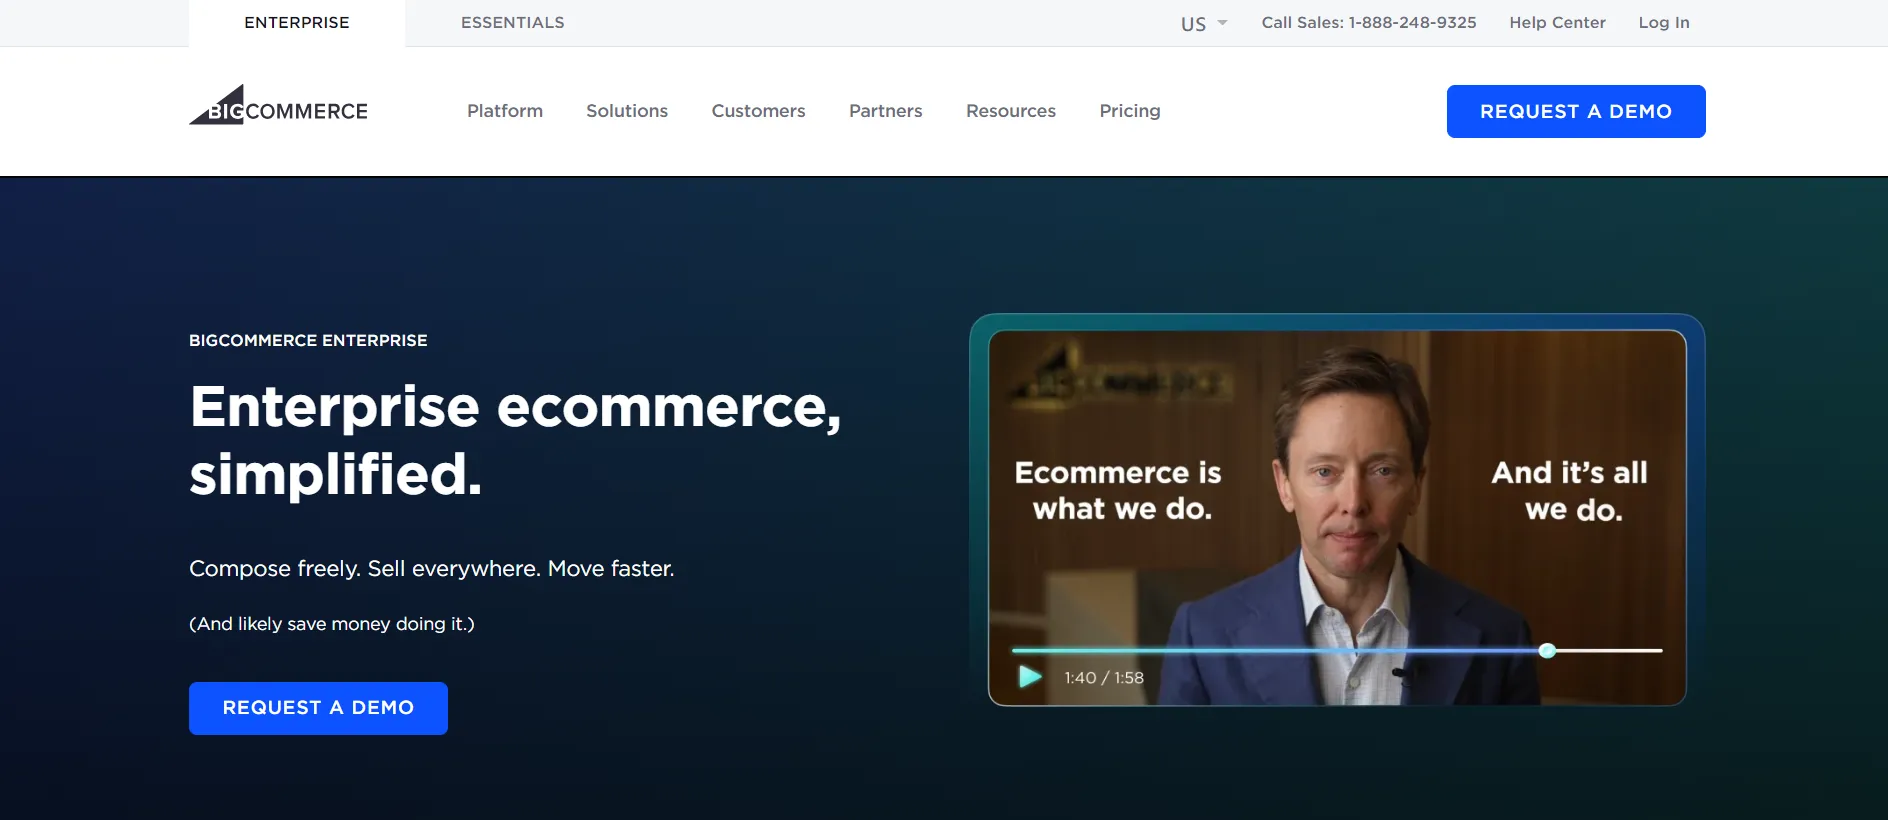 BigCommerce Enterprise homepage